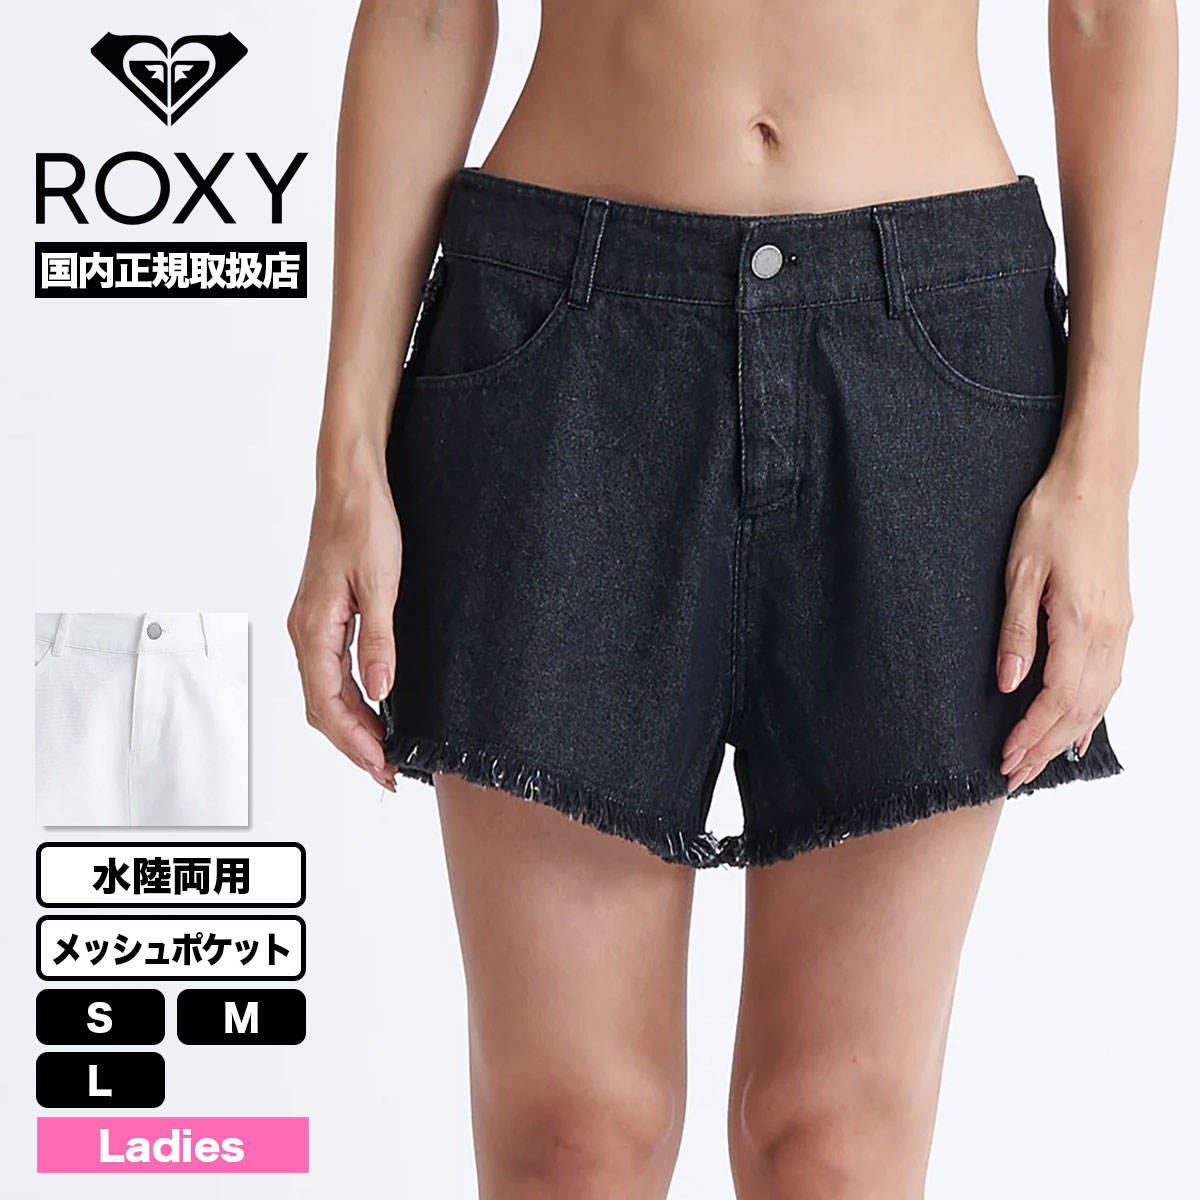 ROXY デニム短パン 【77%OFF!】 - パンツ